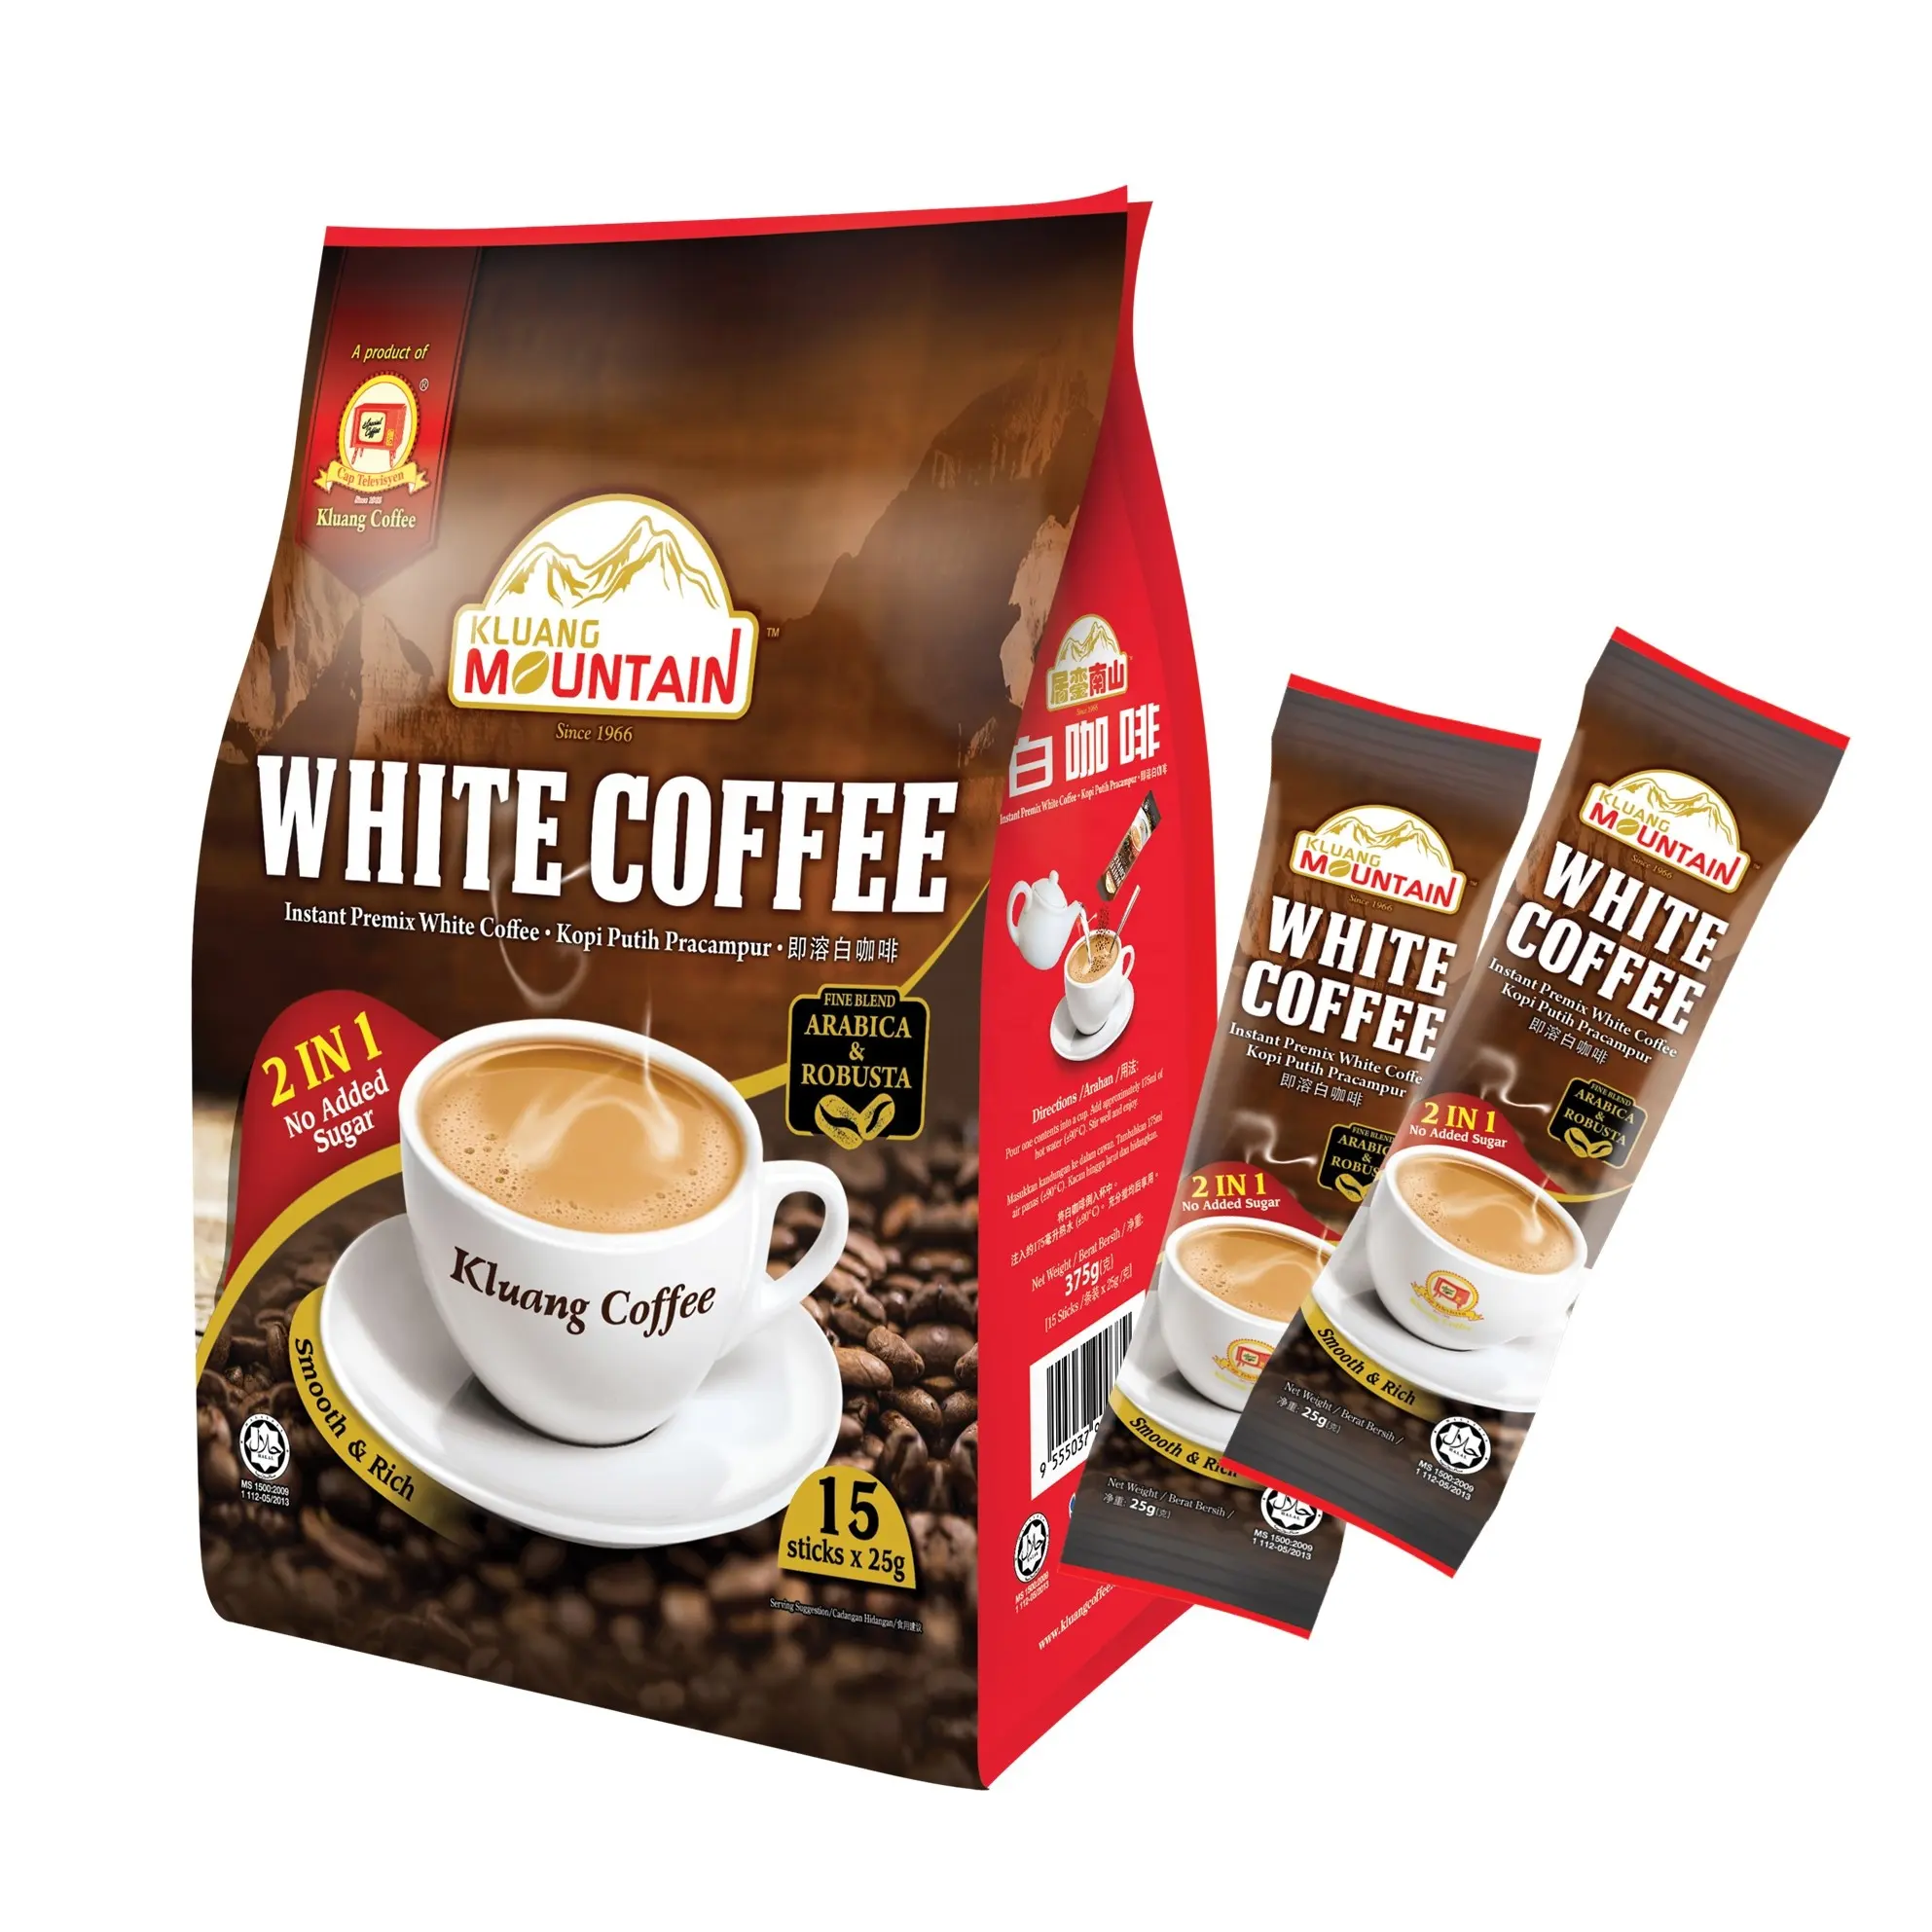 Kluang Mountain caffè bianco istantaneo 2 in 1 (senza zucchero aggiunto) malesia imbottita (15 bastoncini x 25g) marca Televisyen peso netto 375g